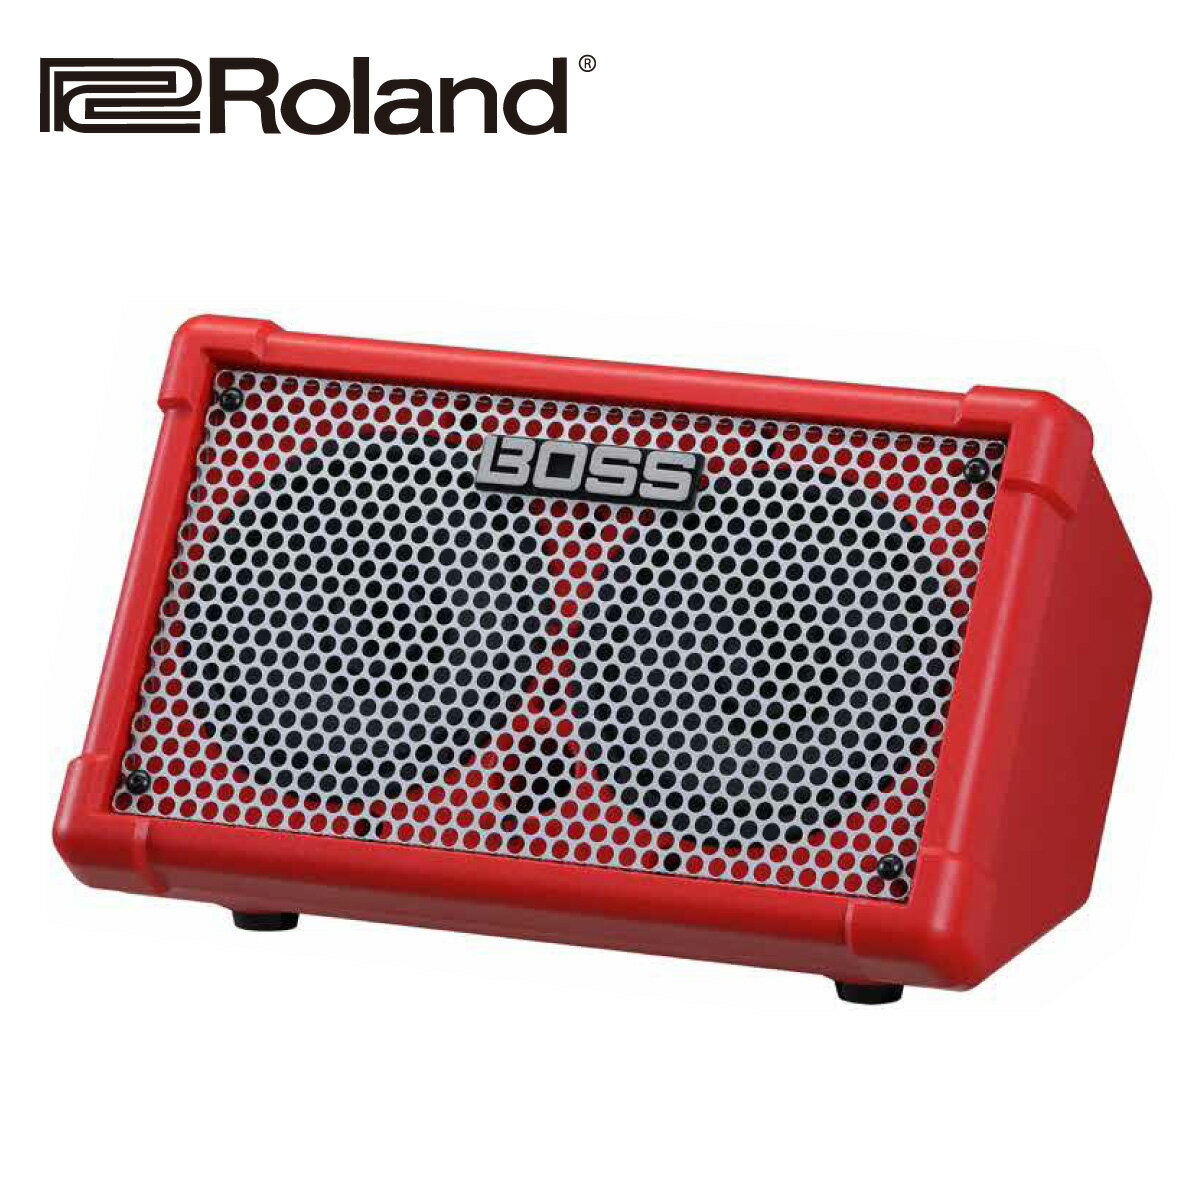 【10W】Roland CUBE Street II レッド 新品 Guitar Amplifier[ローランド][キューブストリート][Red,赤][ギターアンプ/コンボ,Guitar combo amplifier][CUBE-ST2]